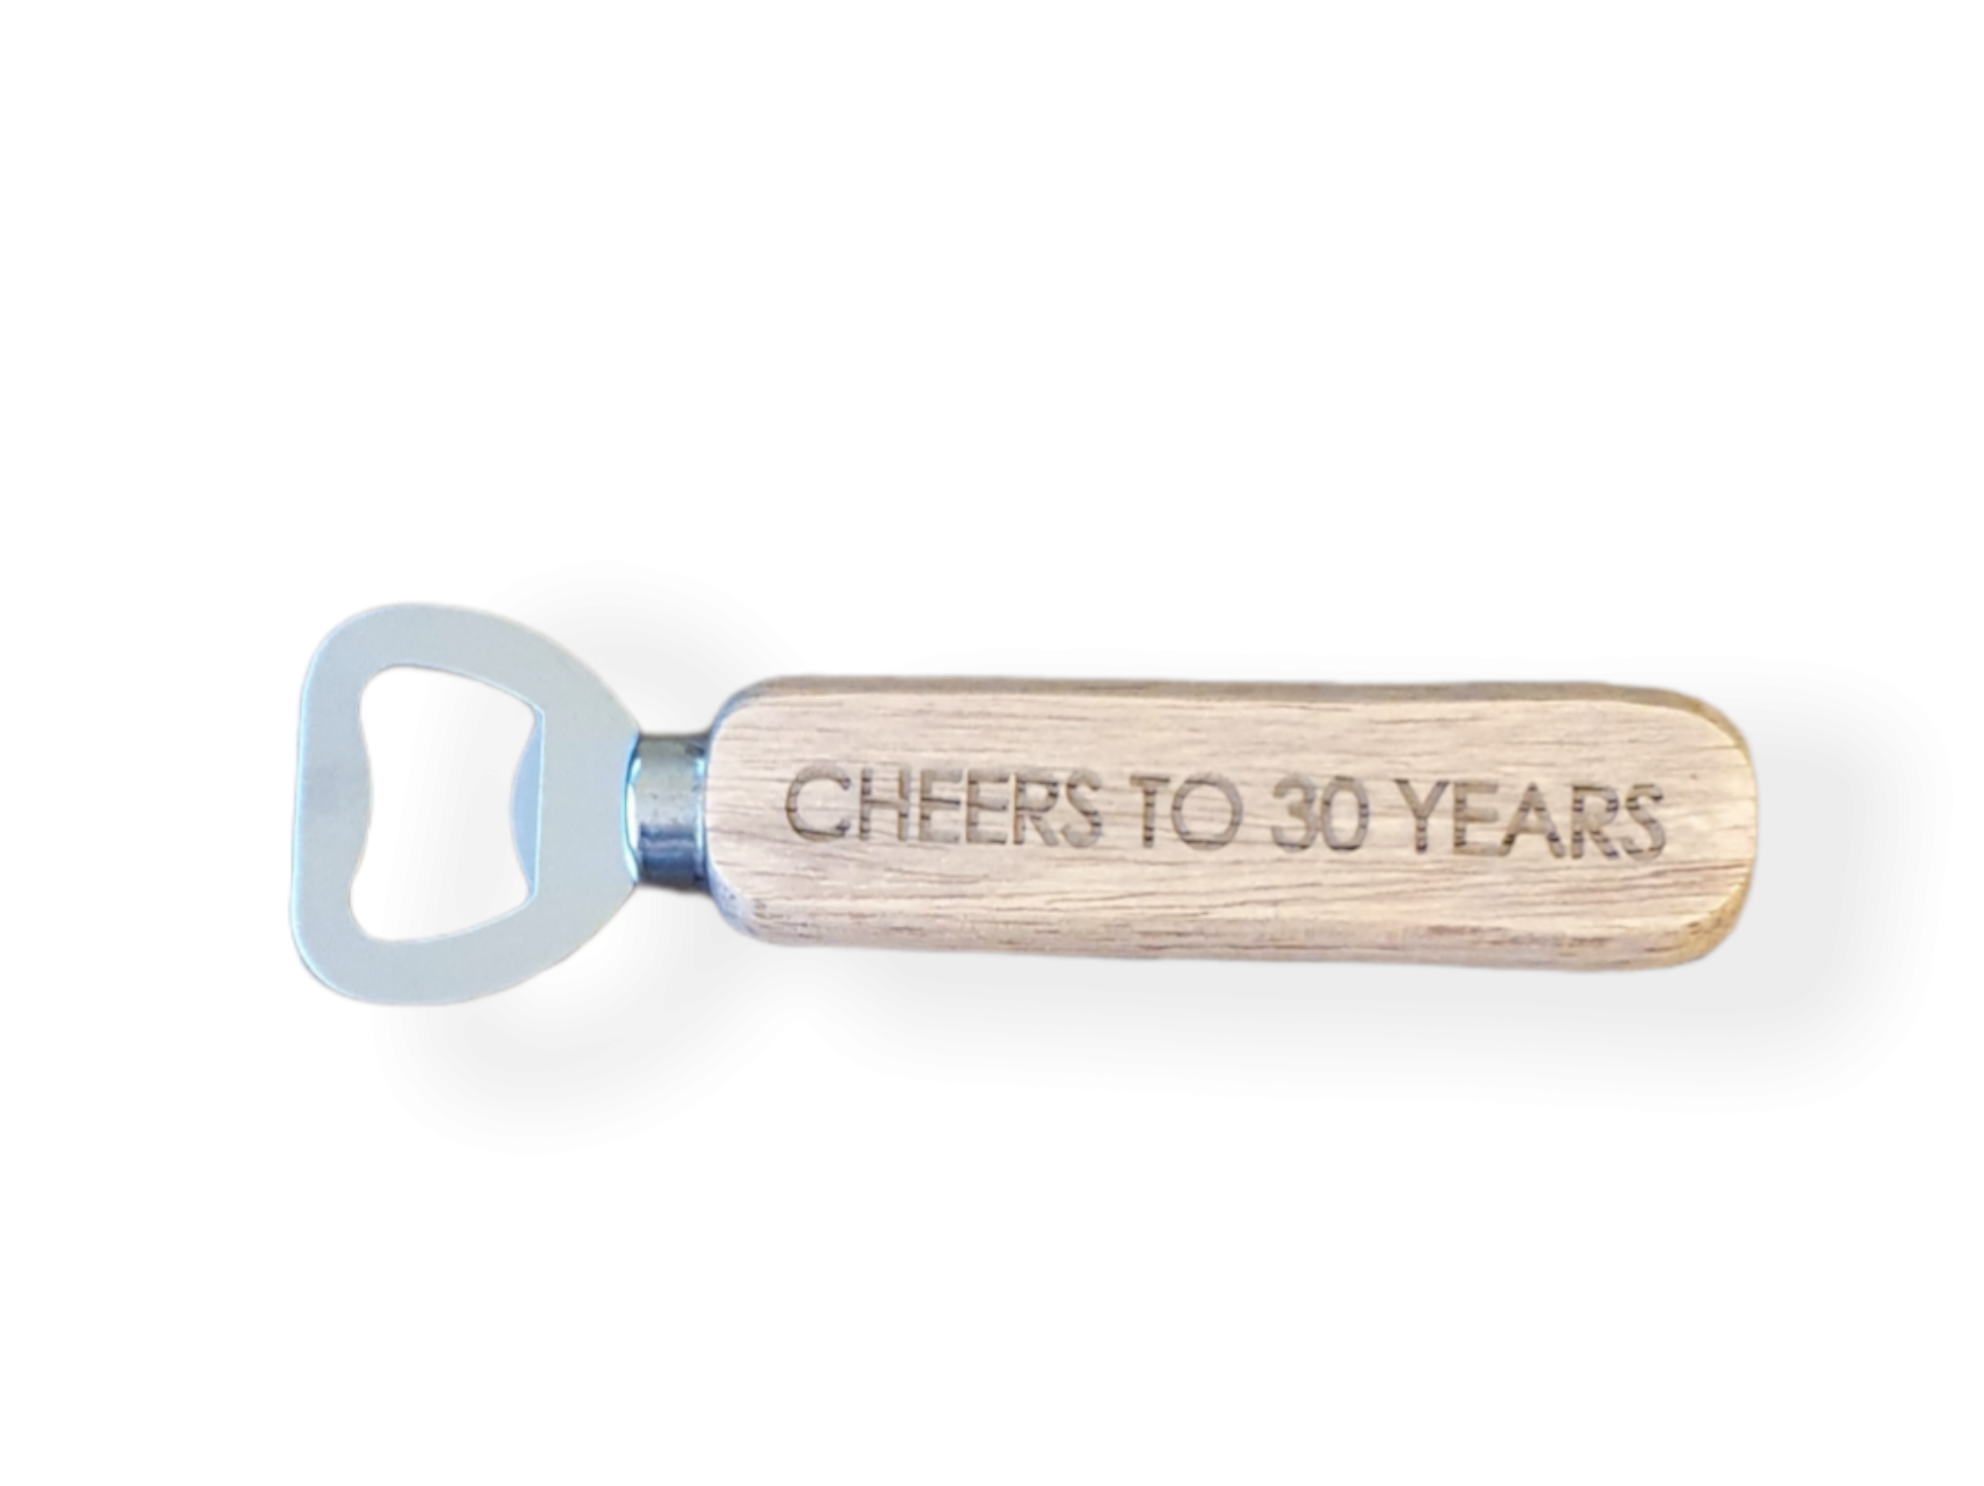 Chunky Rustic wooden handle engraved cheers to 30, metal opener end.